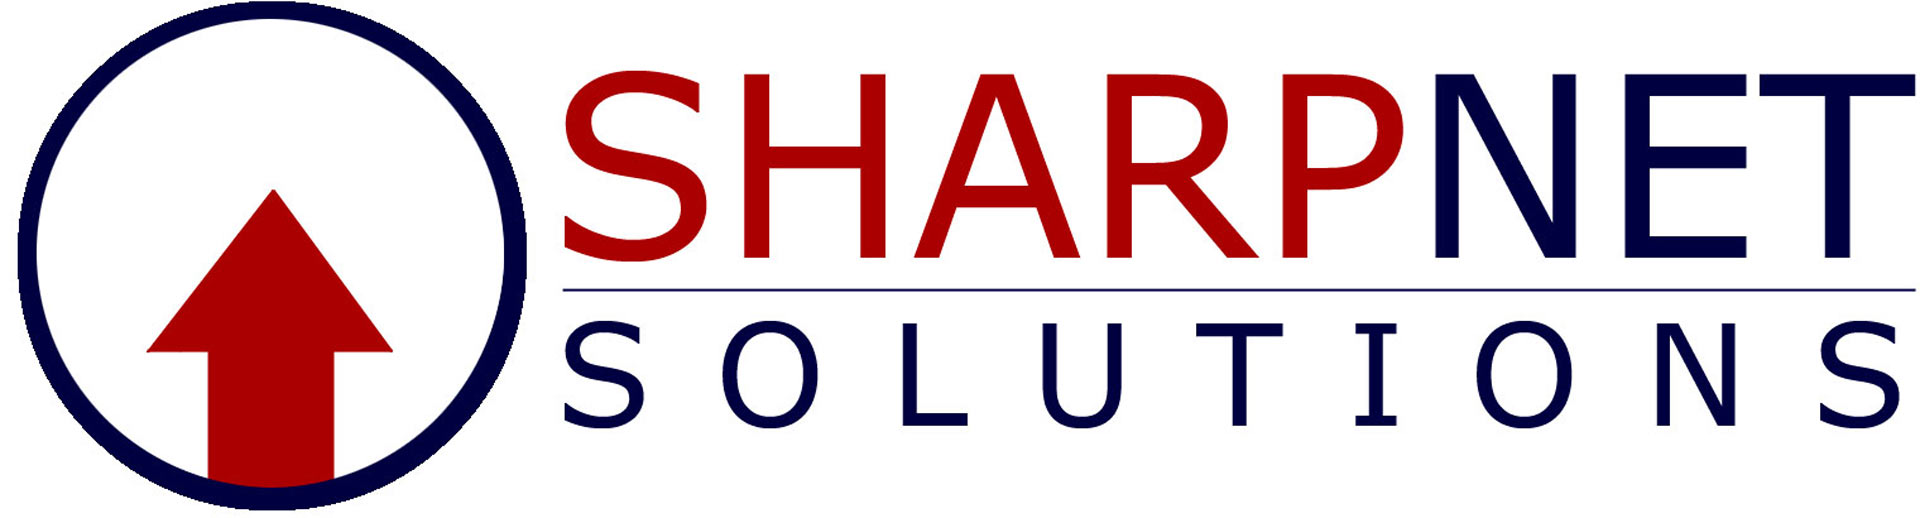 Best Online Marketing Company Logo: SharpNet